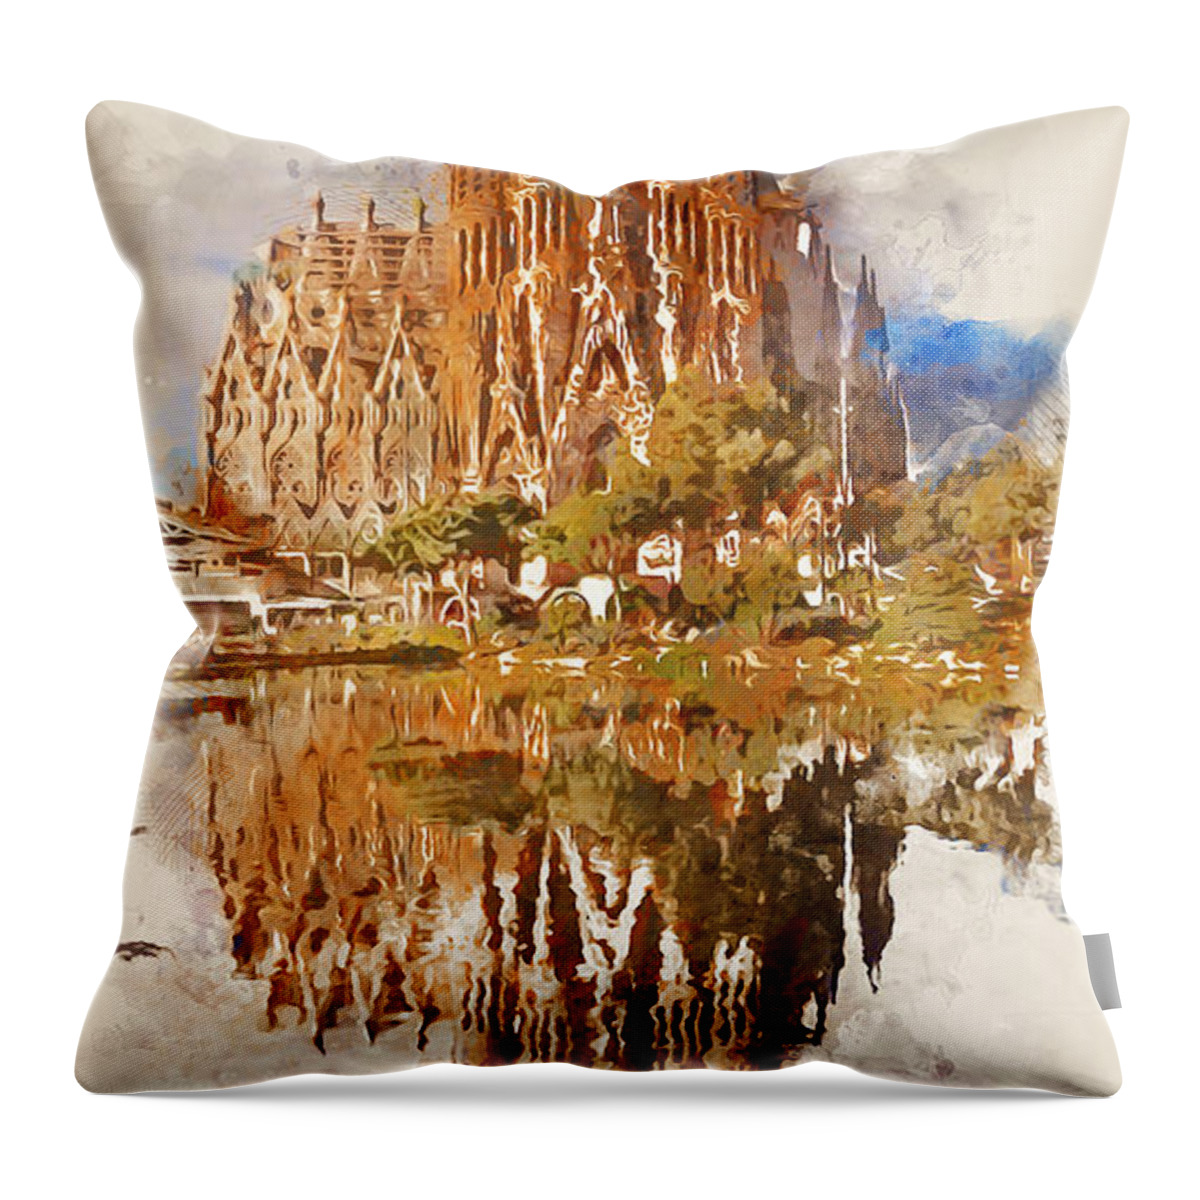 Sagrada Familia Throw Pillow featuring the painting Barcelona, Sagrada Familia - Watercolor 04 by AM FineArtPrints